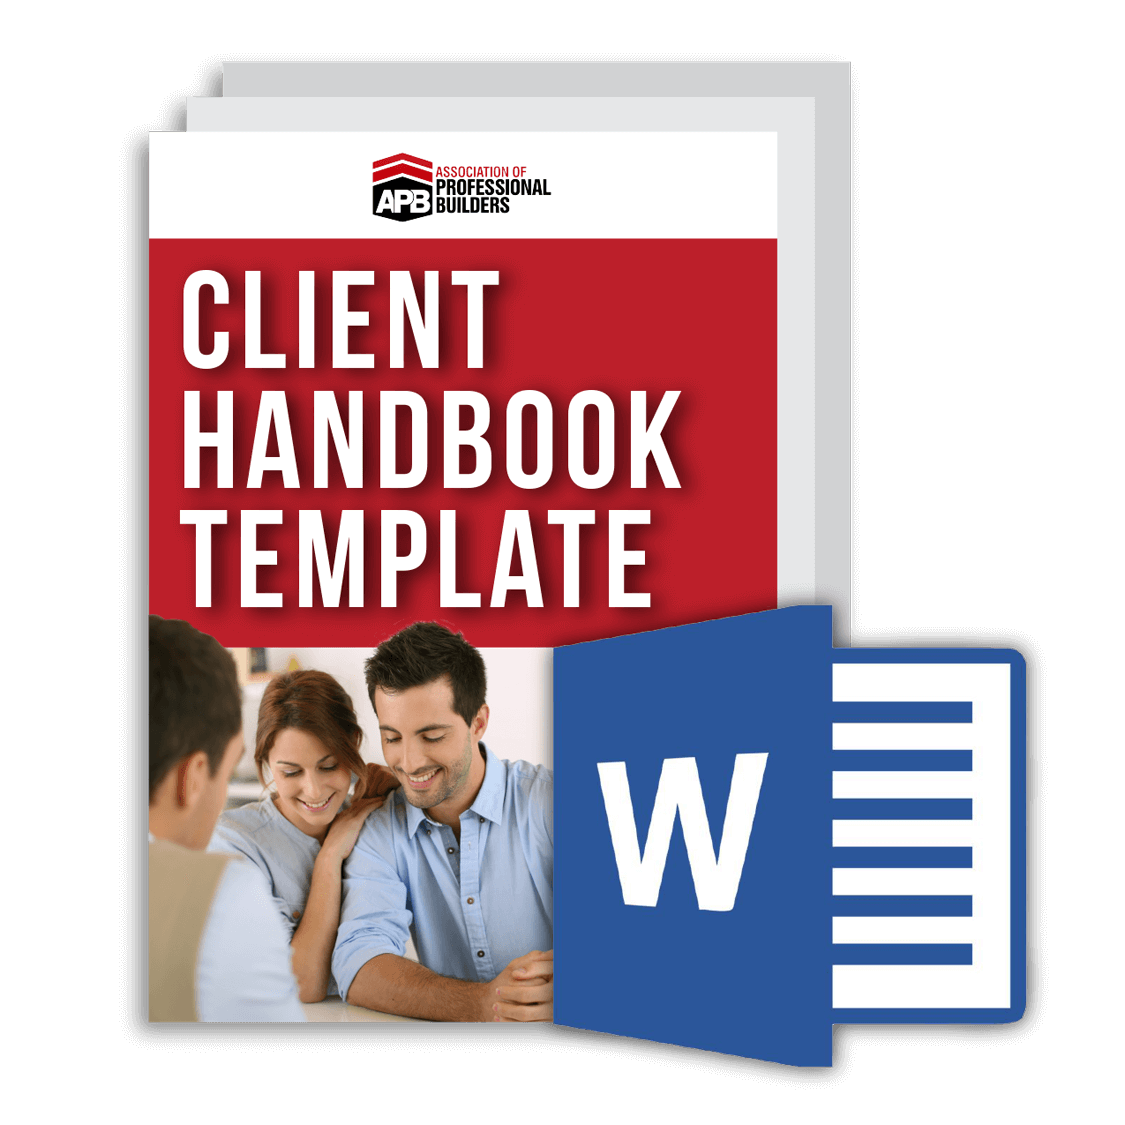 Download The Client Handbook Template